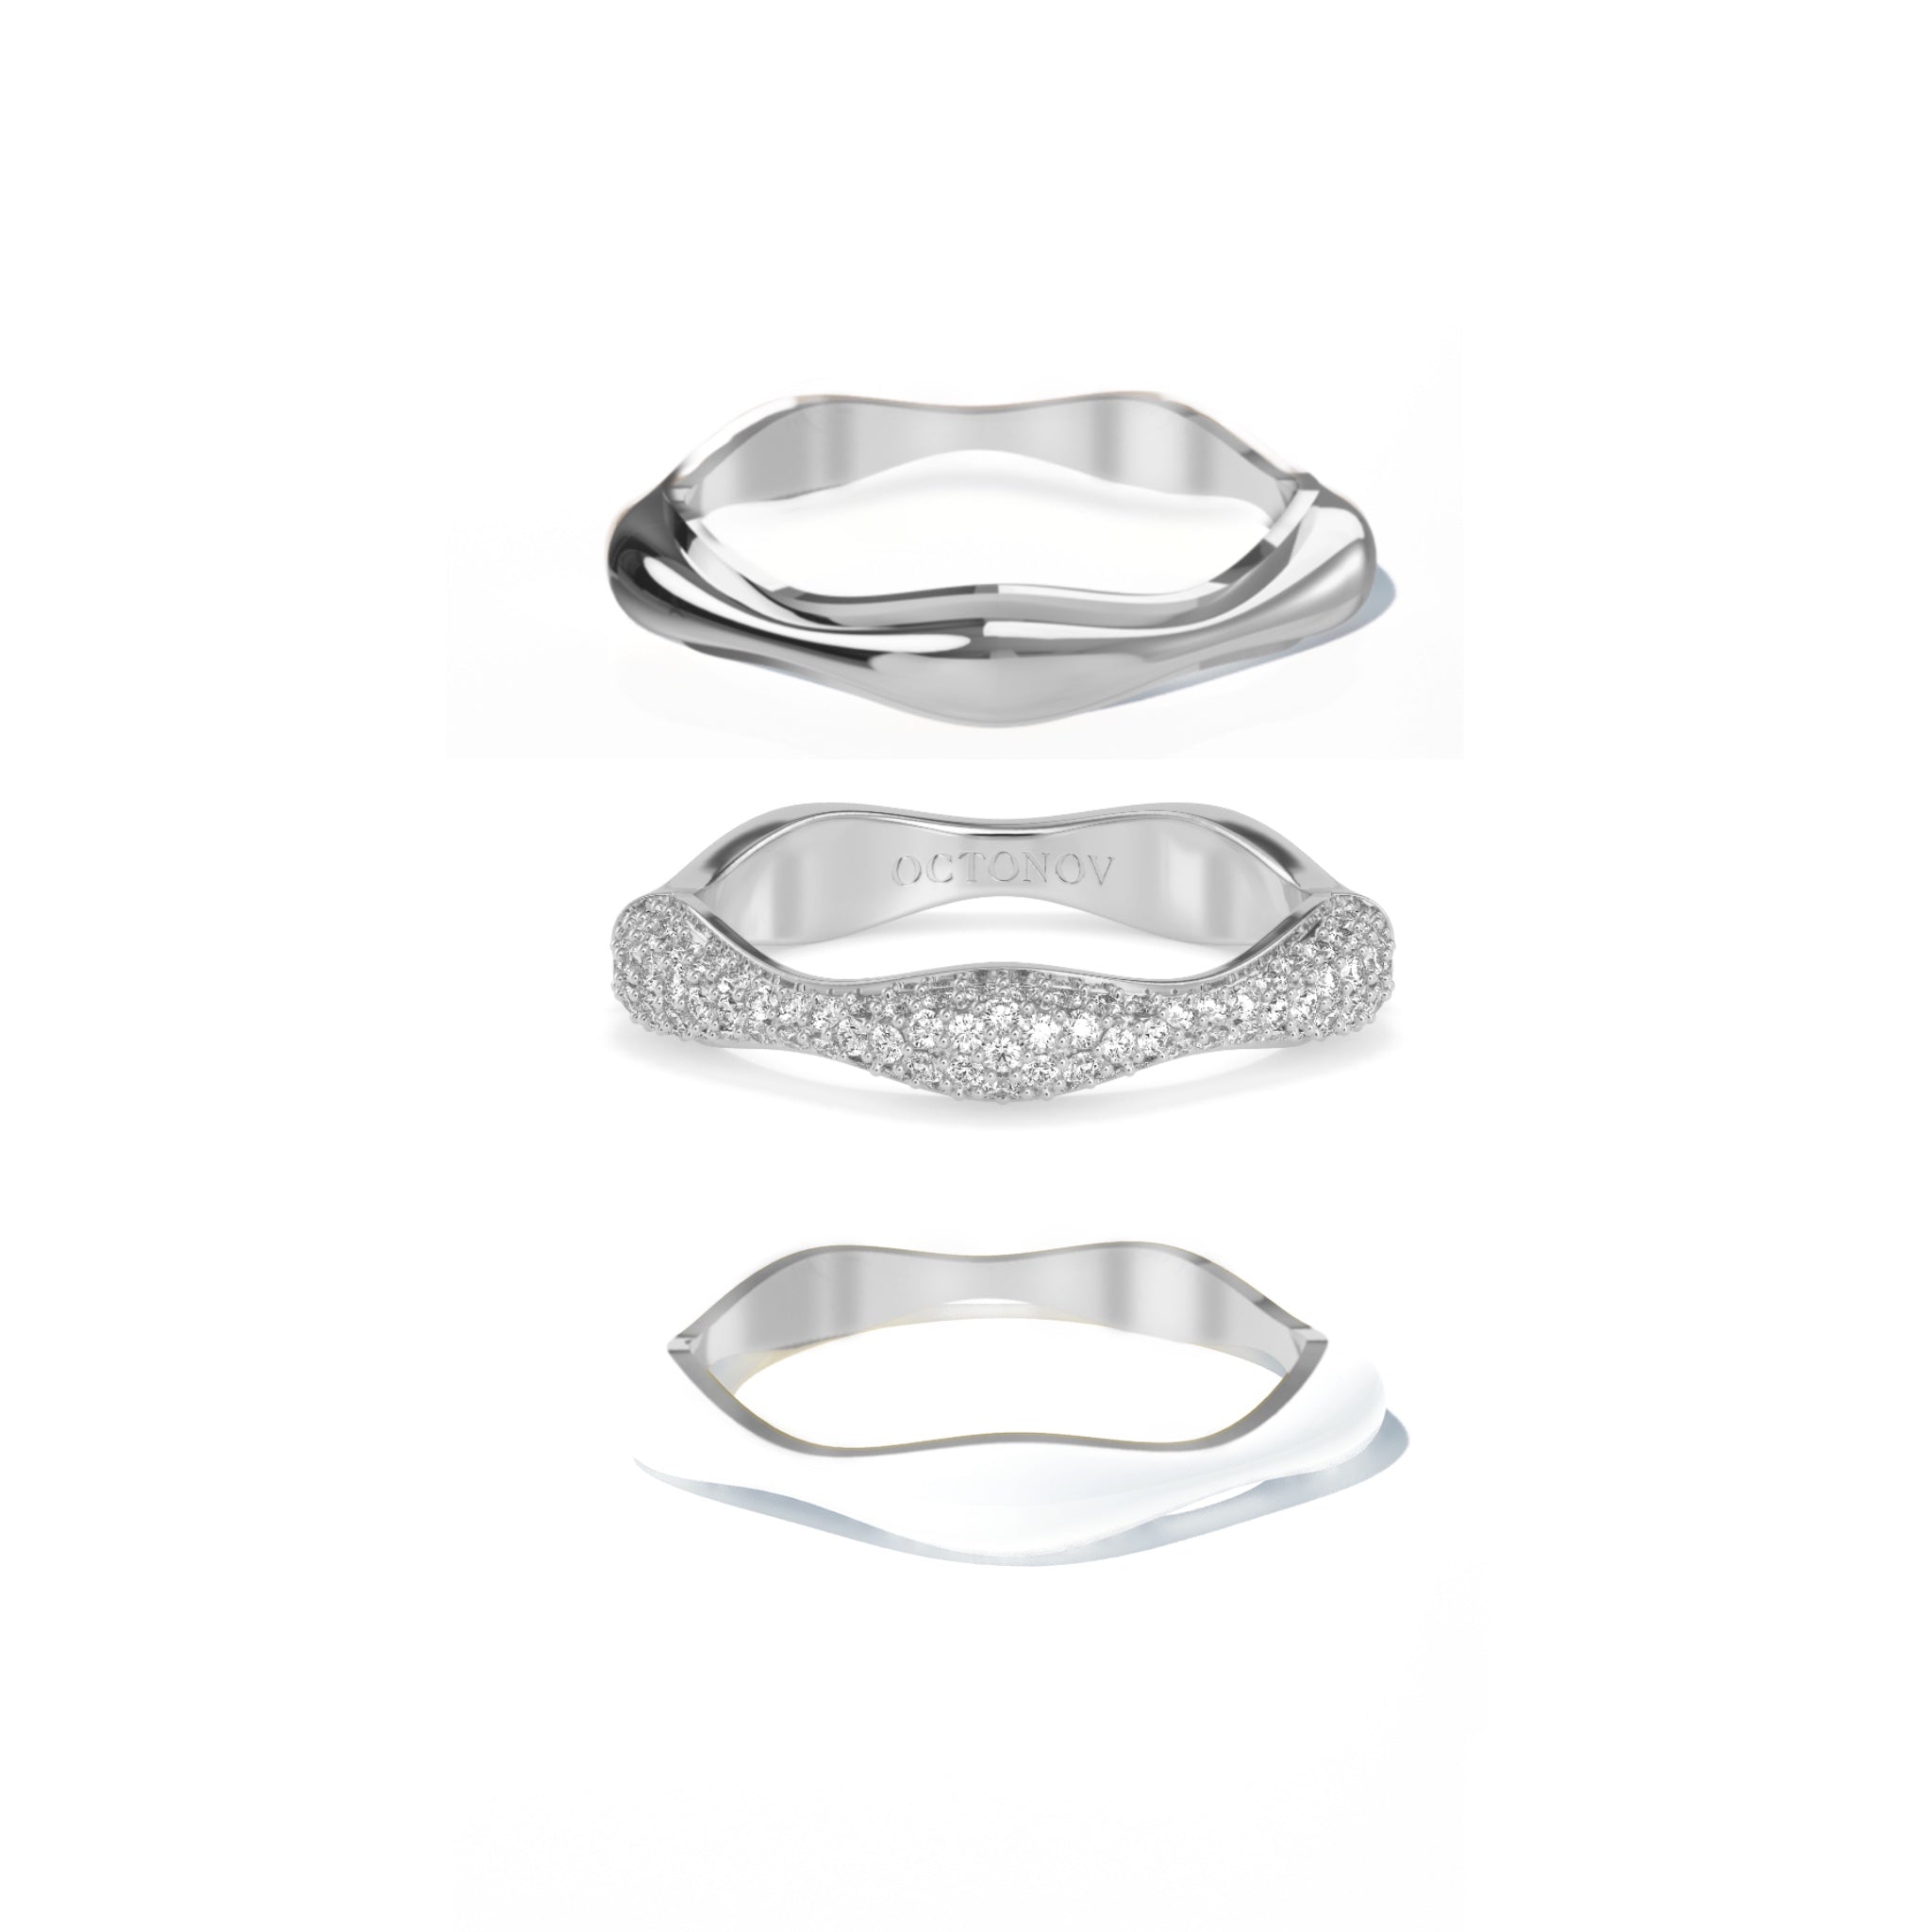 Sorbet Swirls Solid + Vanilla Enamel + Diamond Swirls Stacker Ring Set of 3 - Octonov 